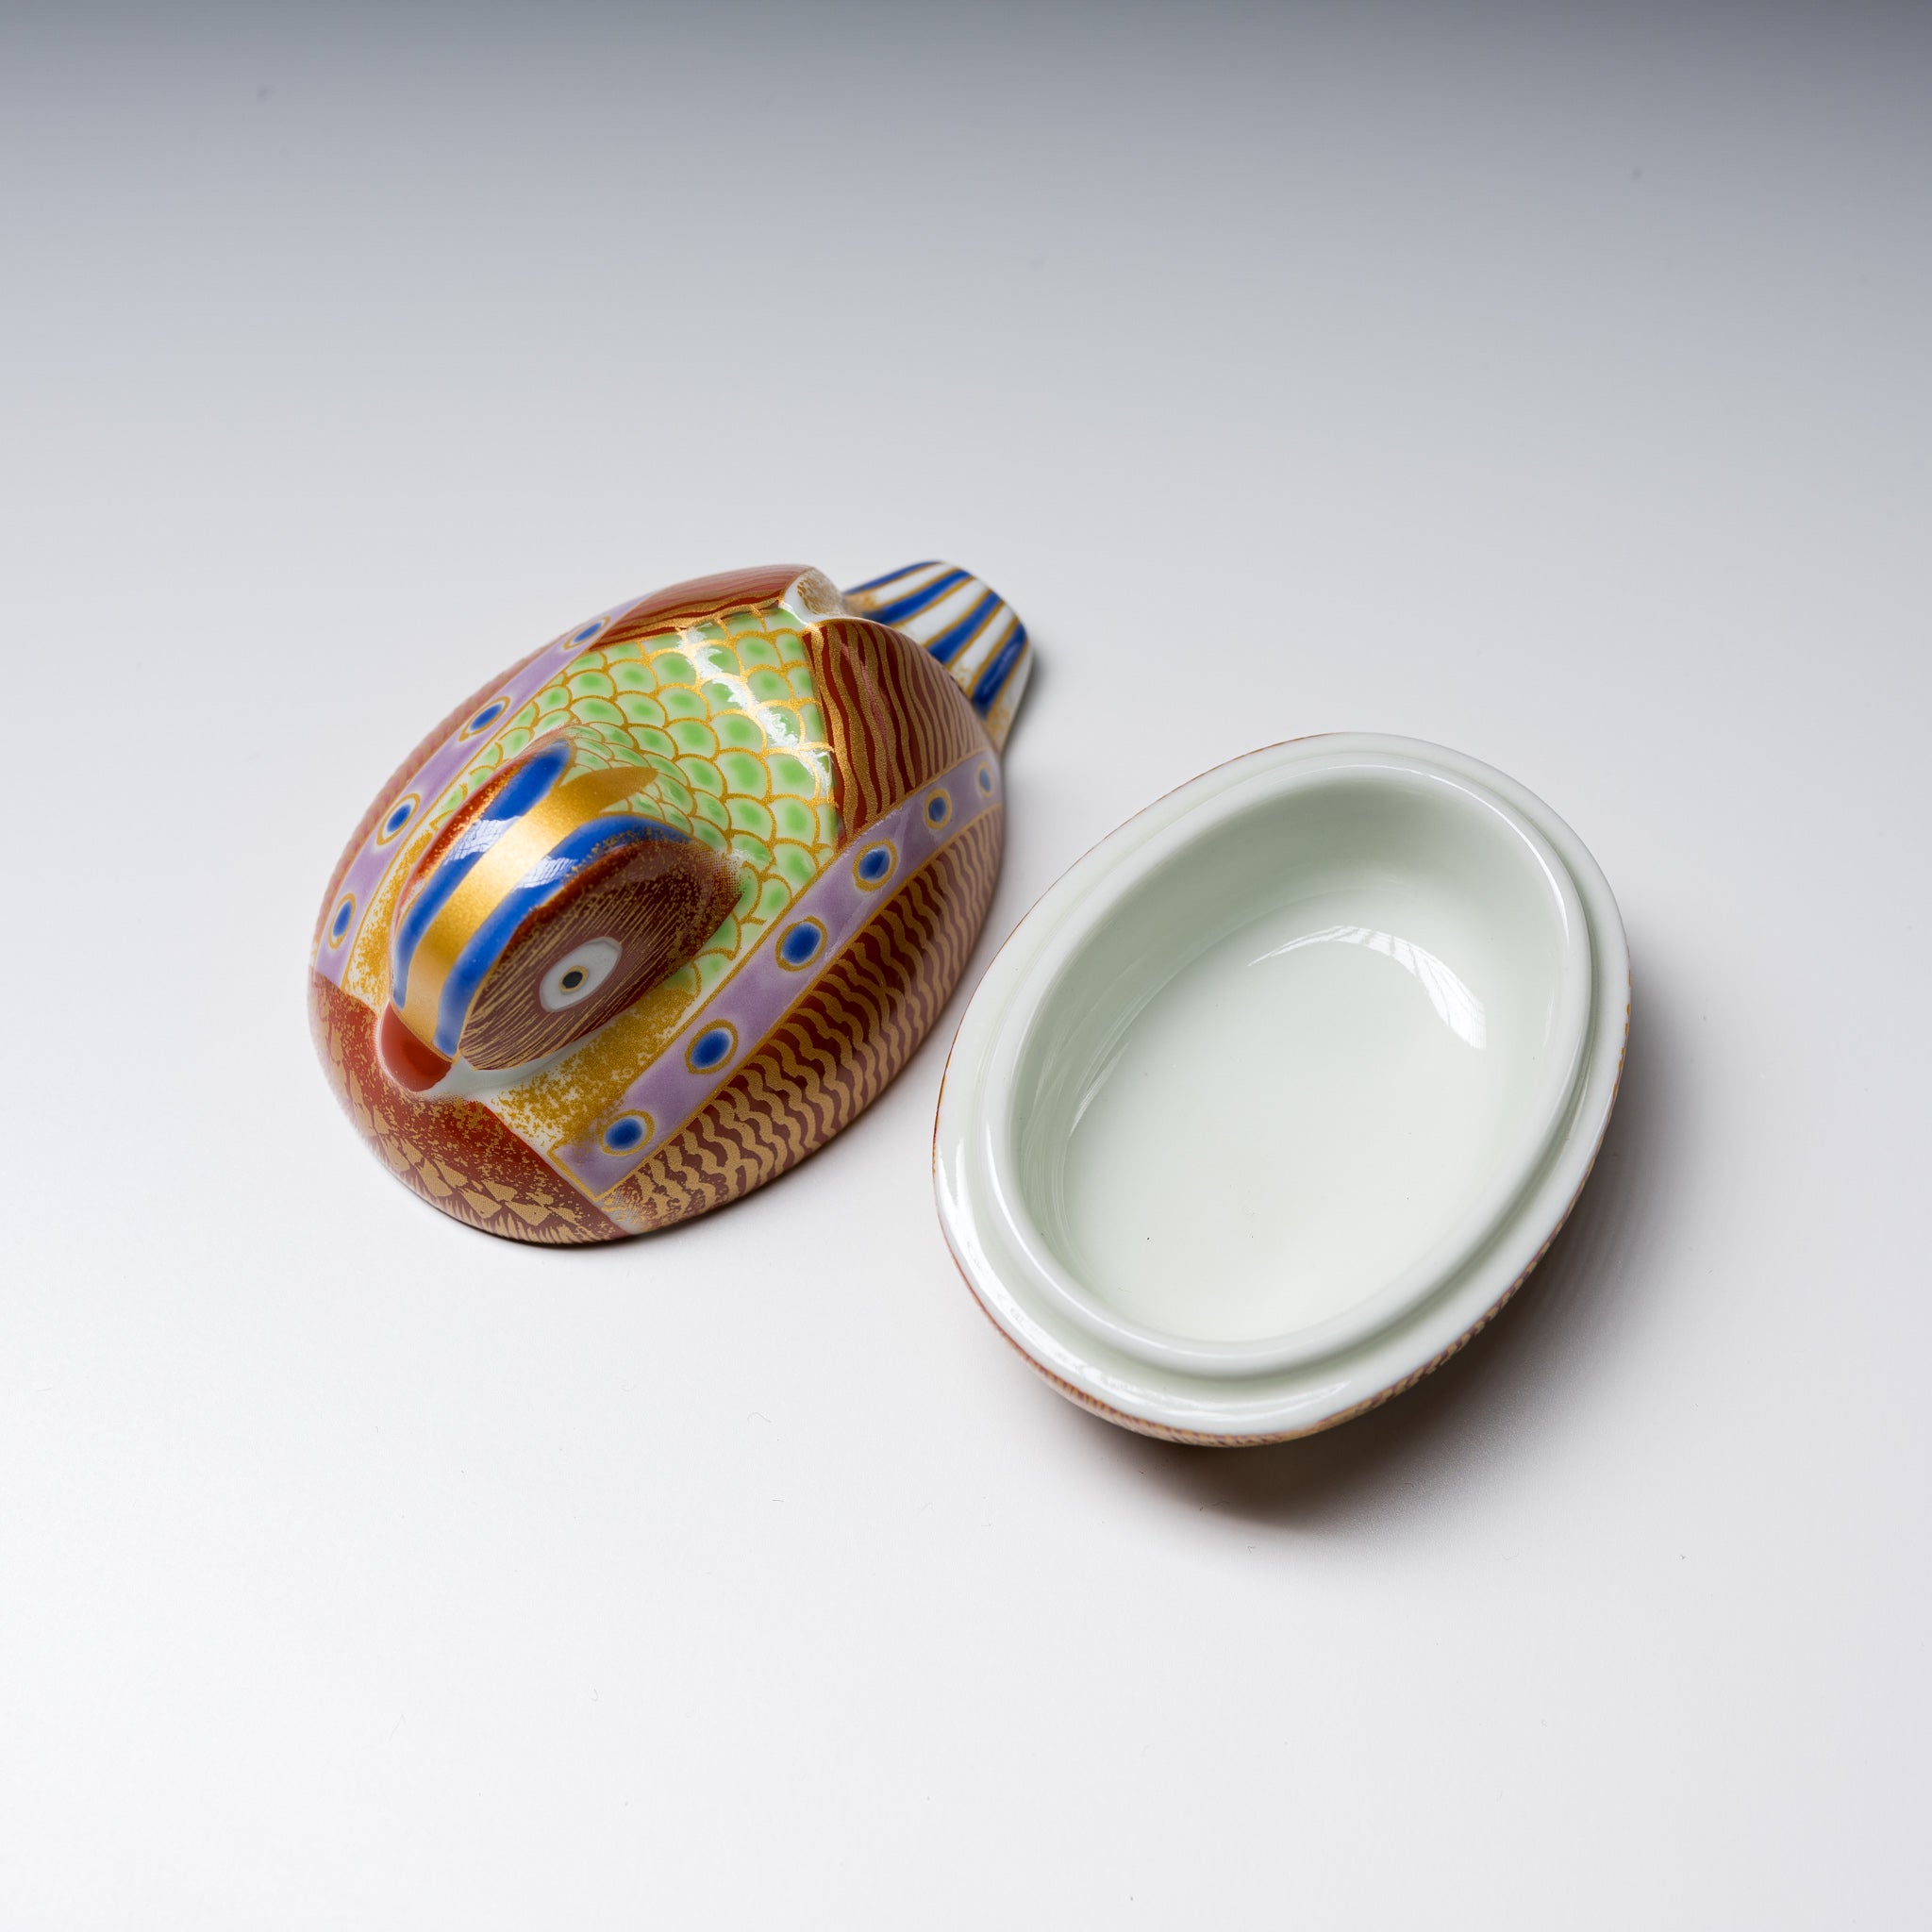 Arita Ware Mandarin Duck Condiment Container - Male / おしどり珍味入れ 雄